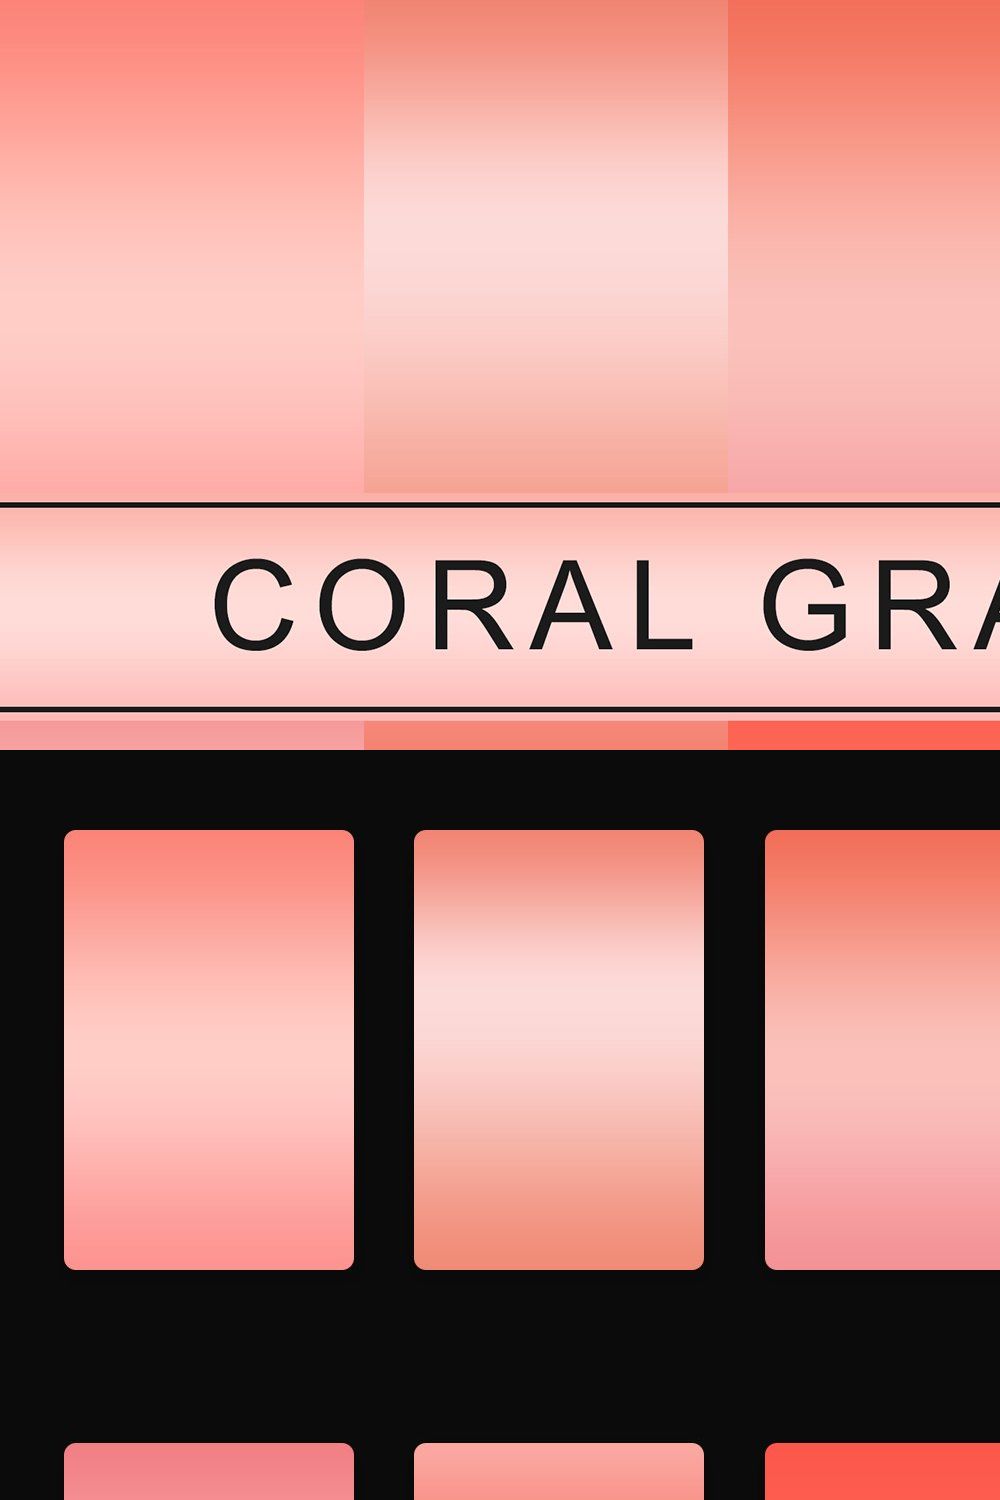 Coral Gradients pinterest preview image.